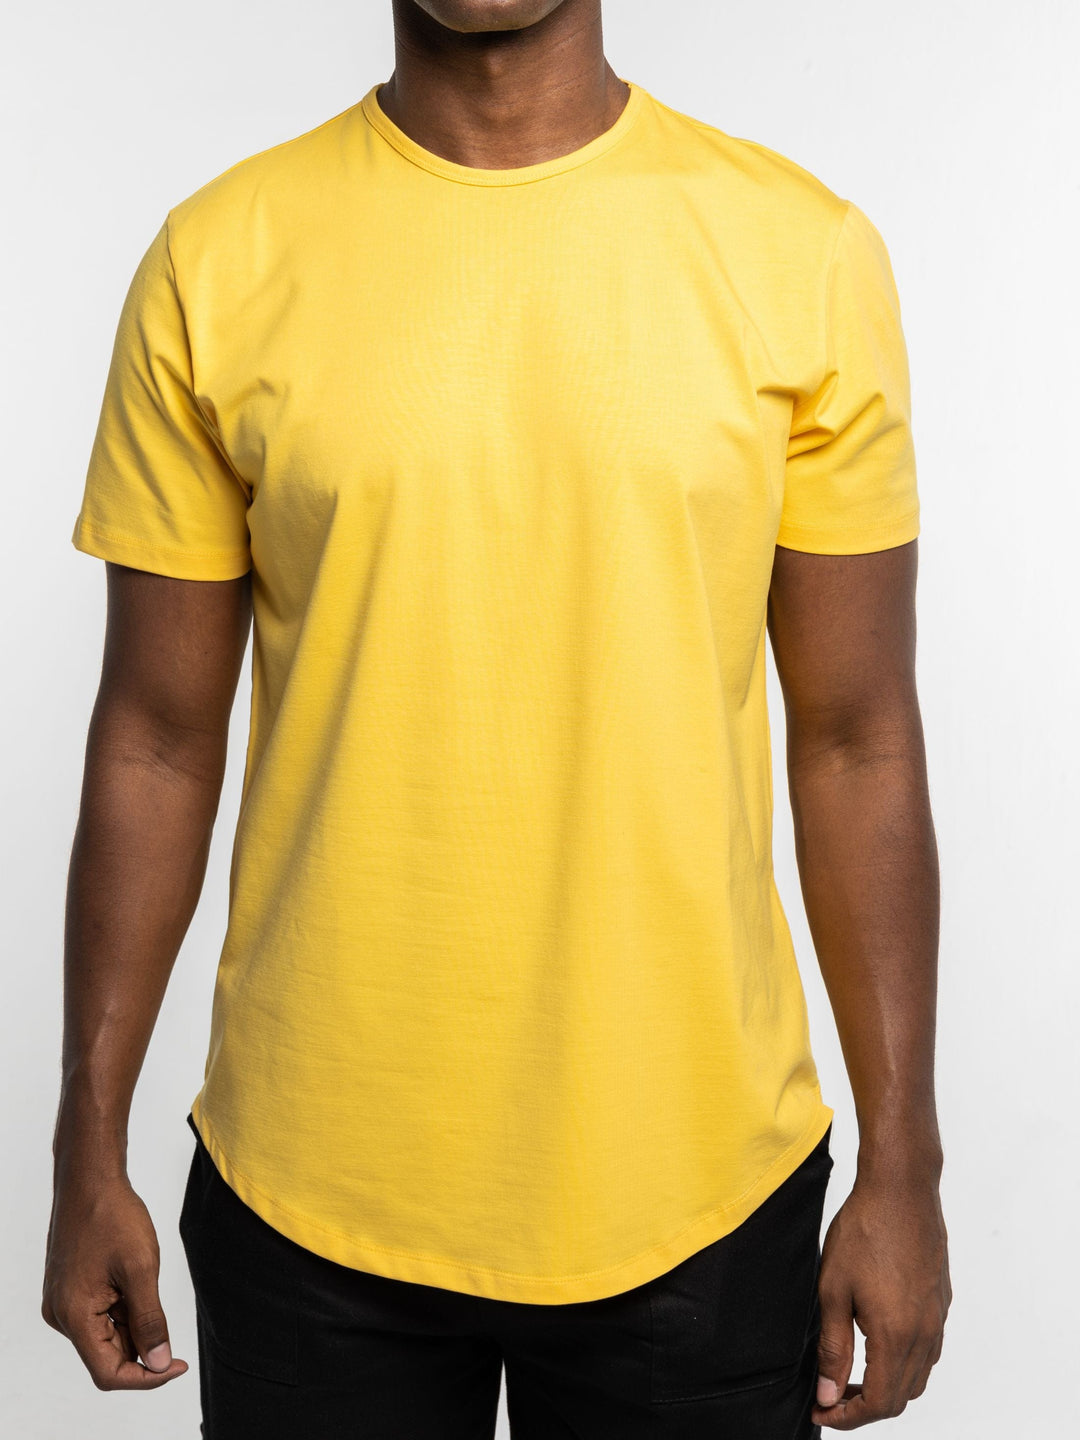 Nuuk Yellow Curved Hem T-Shirt: SLS Comfort